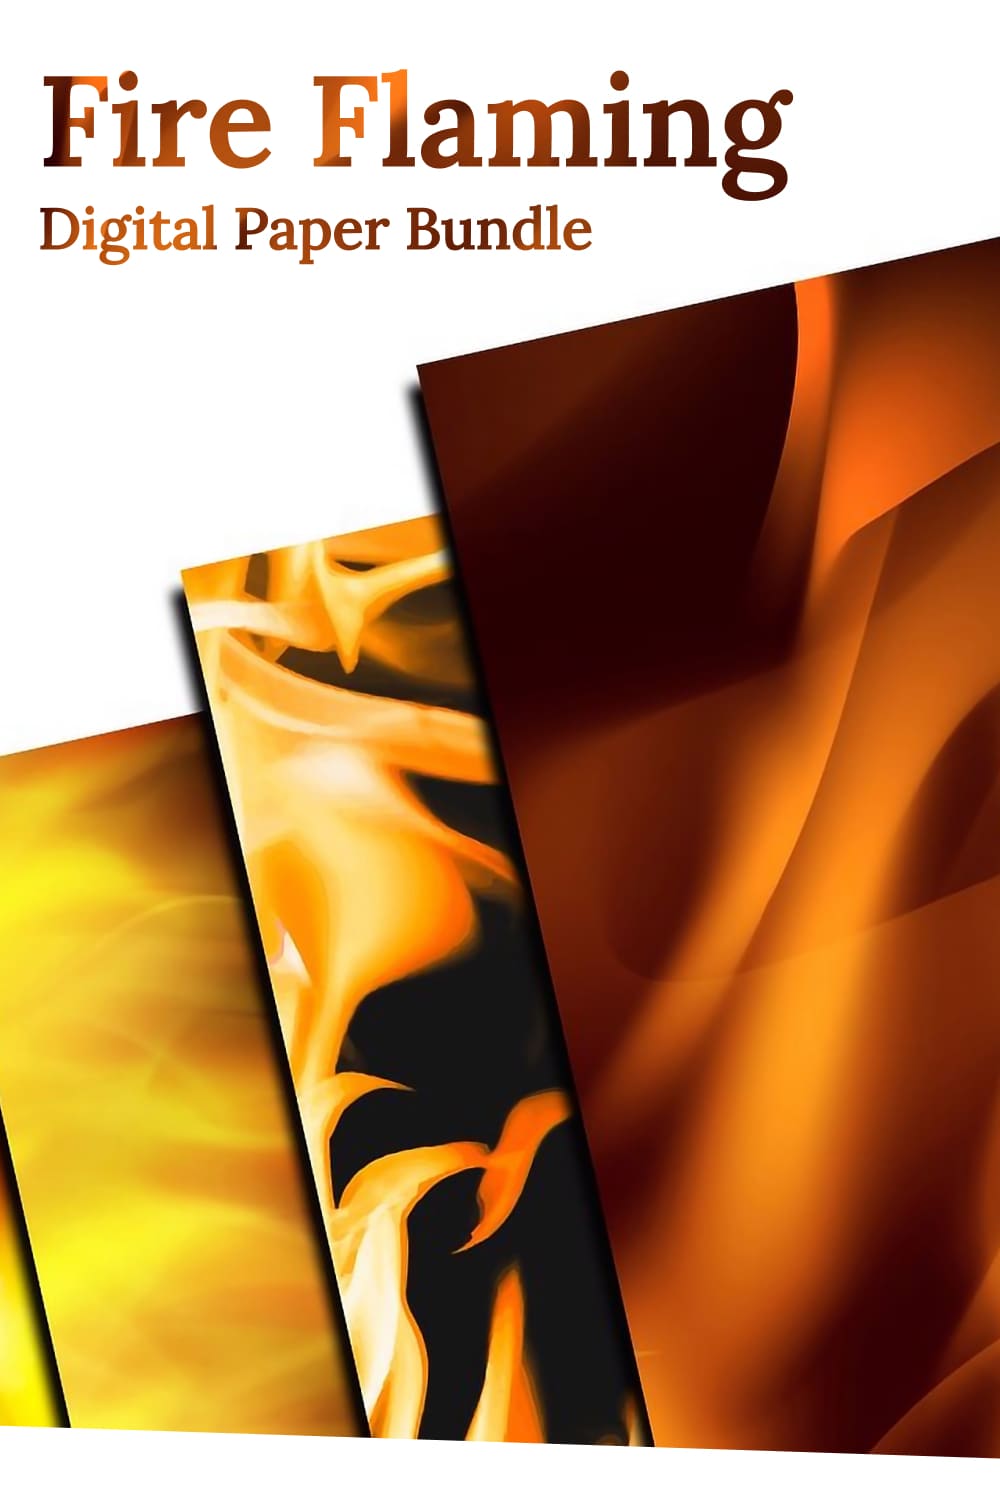 Fire Flaming Digital Paper Bundle Best Bundle - pinterest image preview.